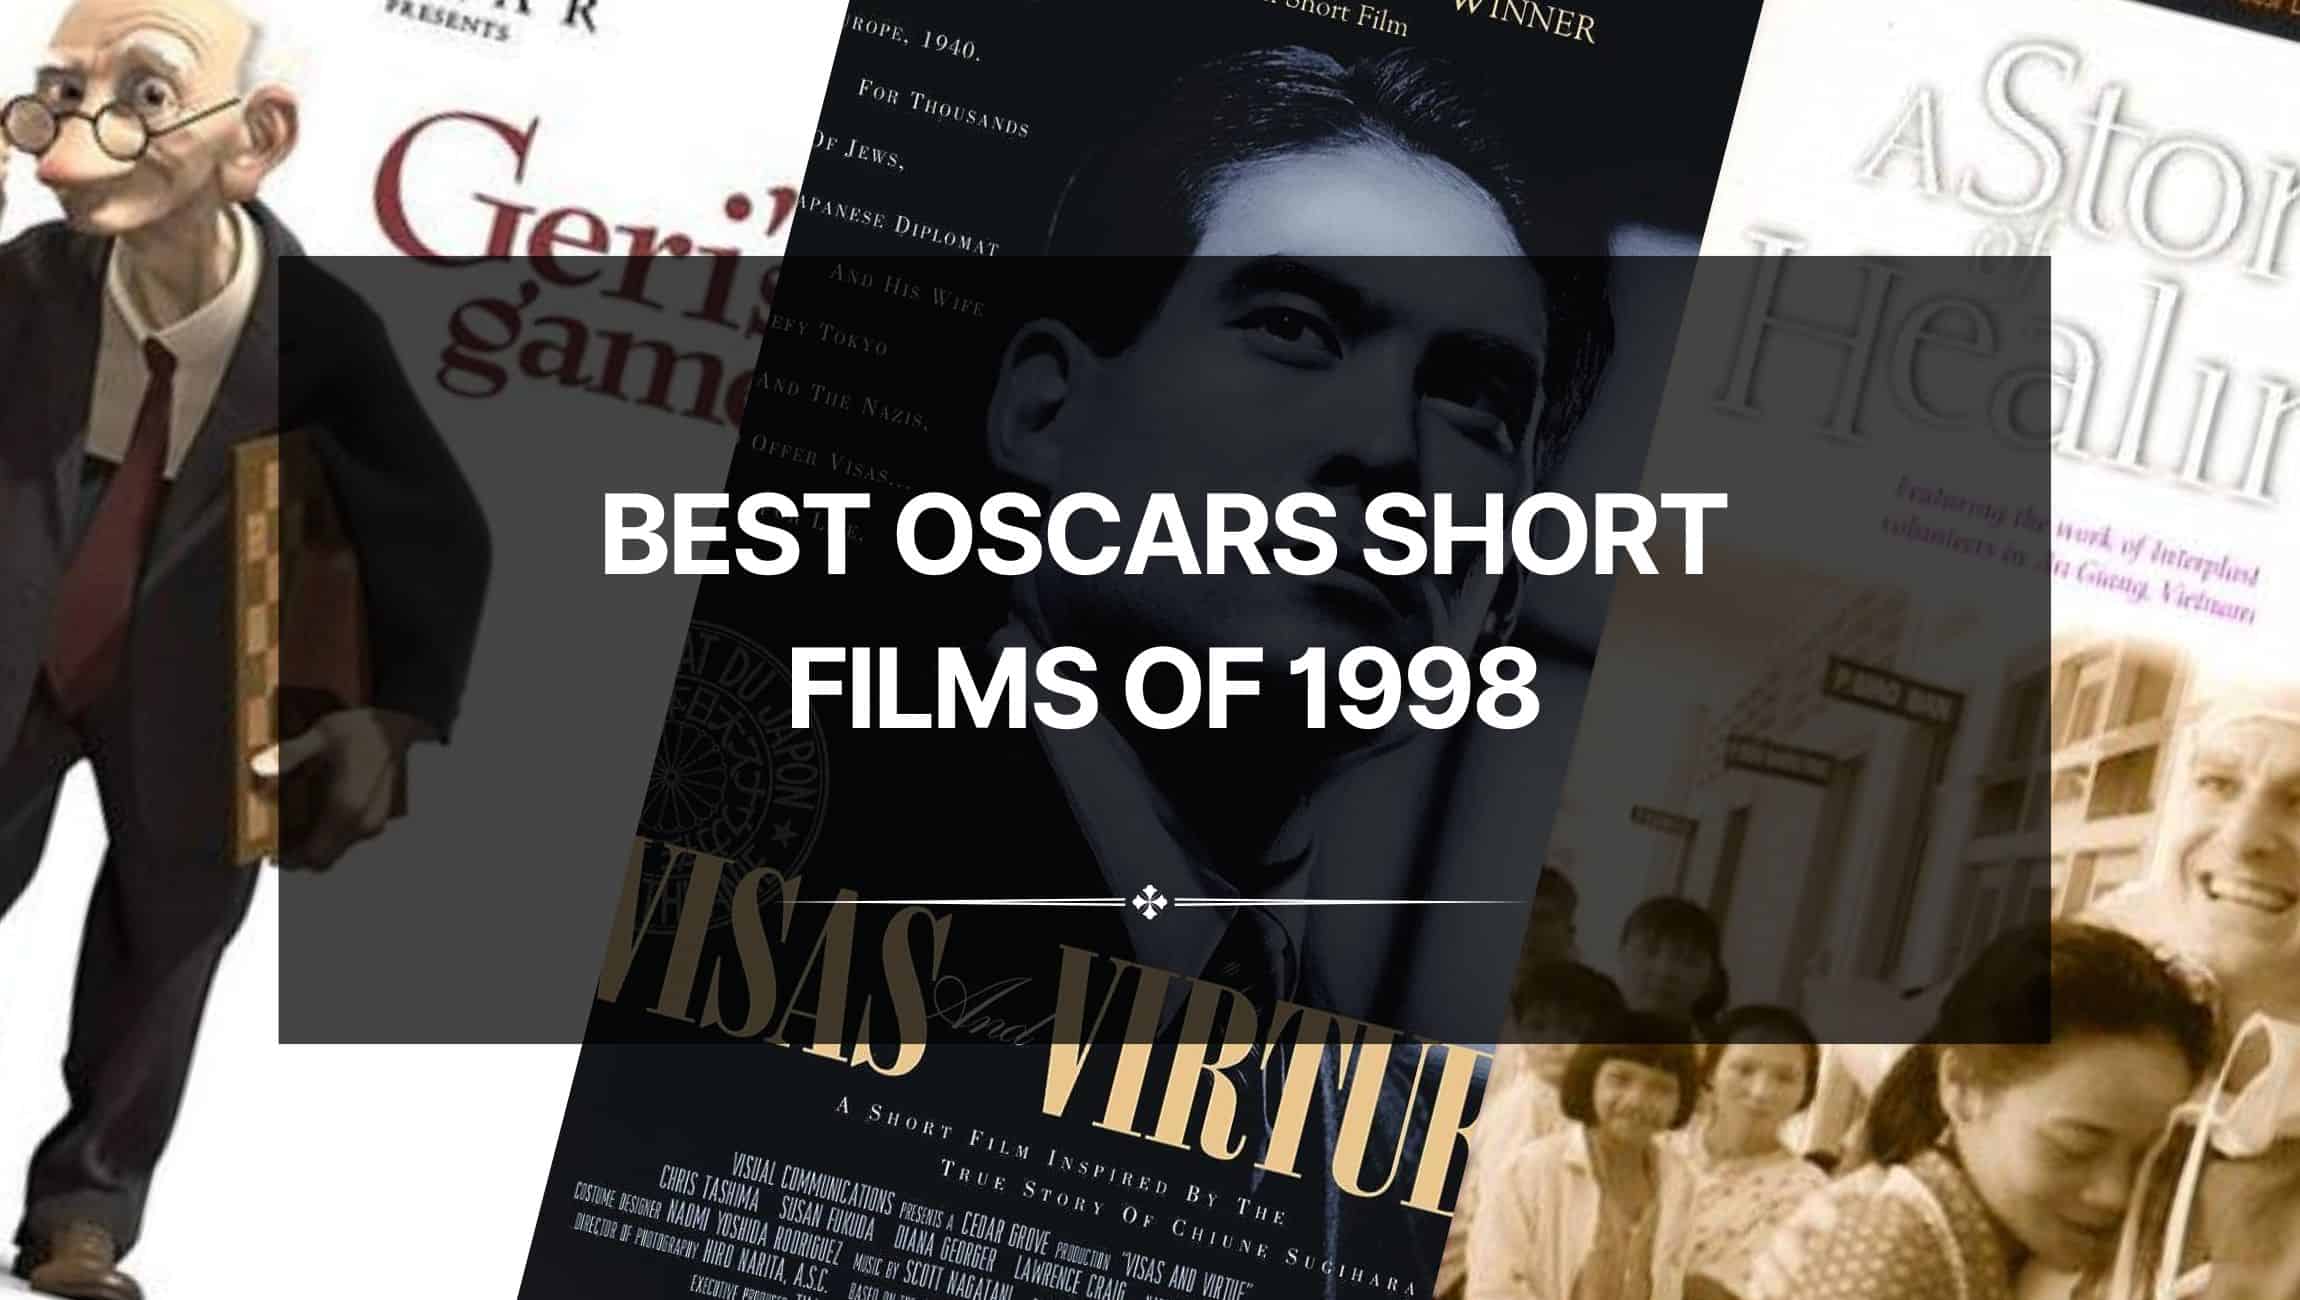 Best Oscars Short Films of 1998